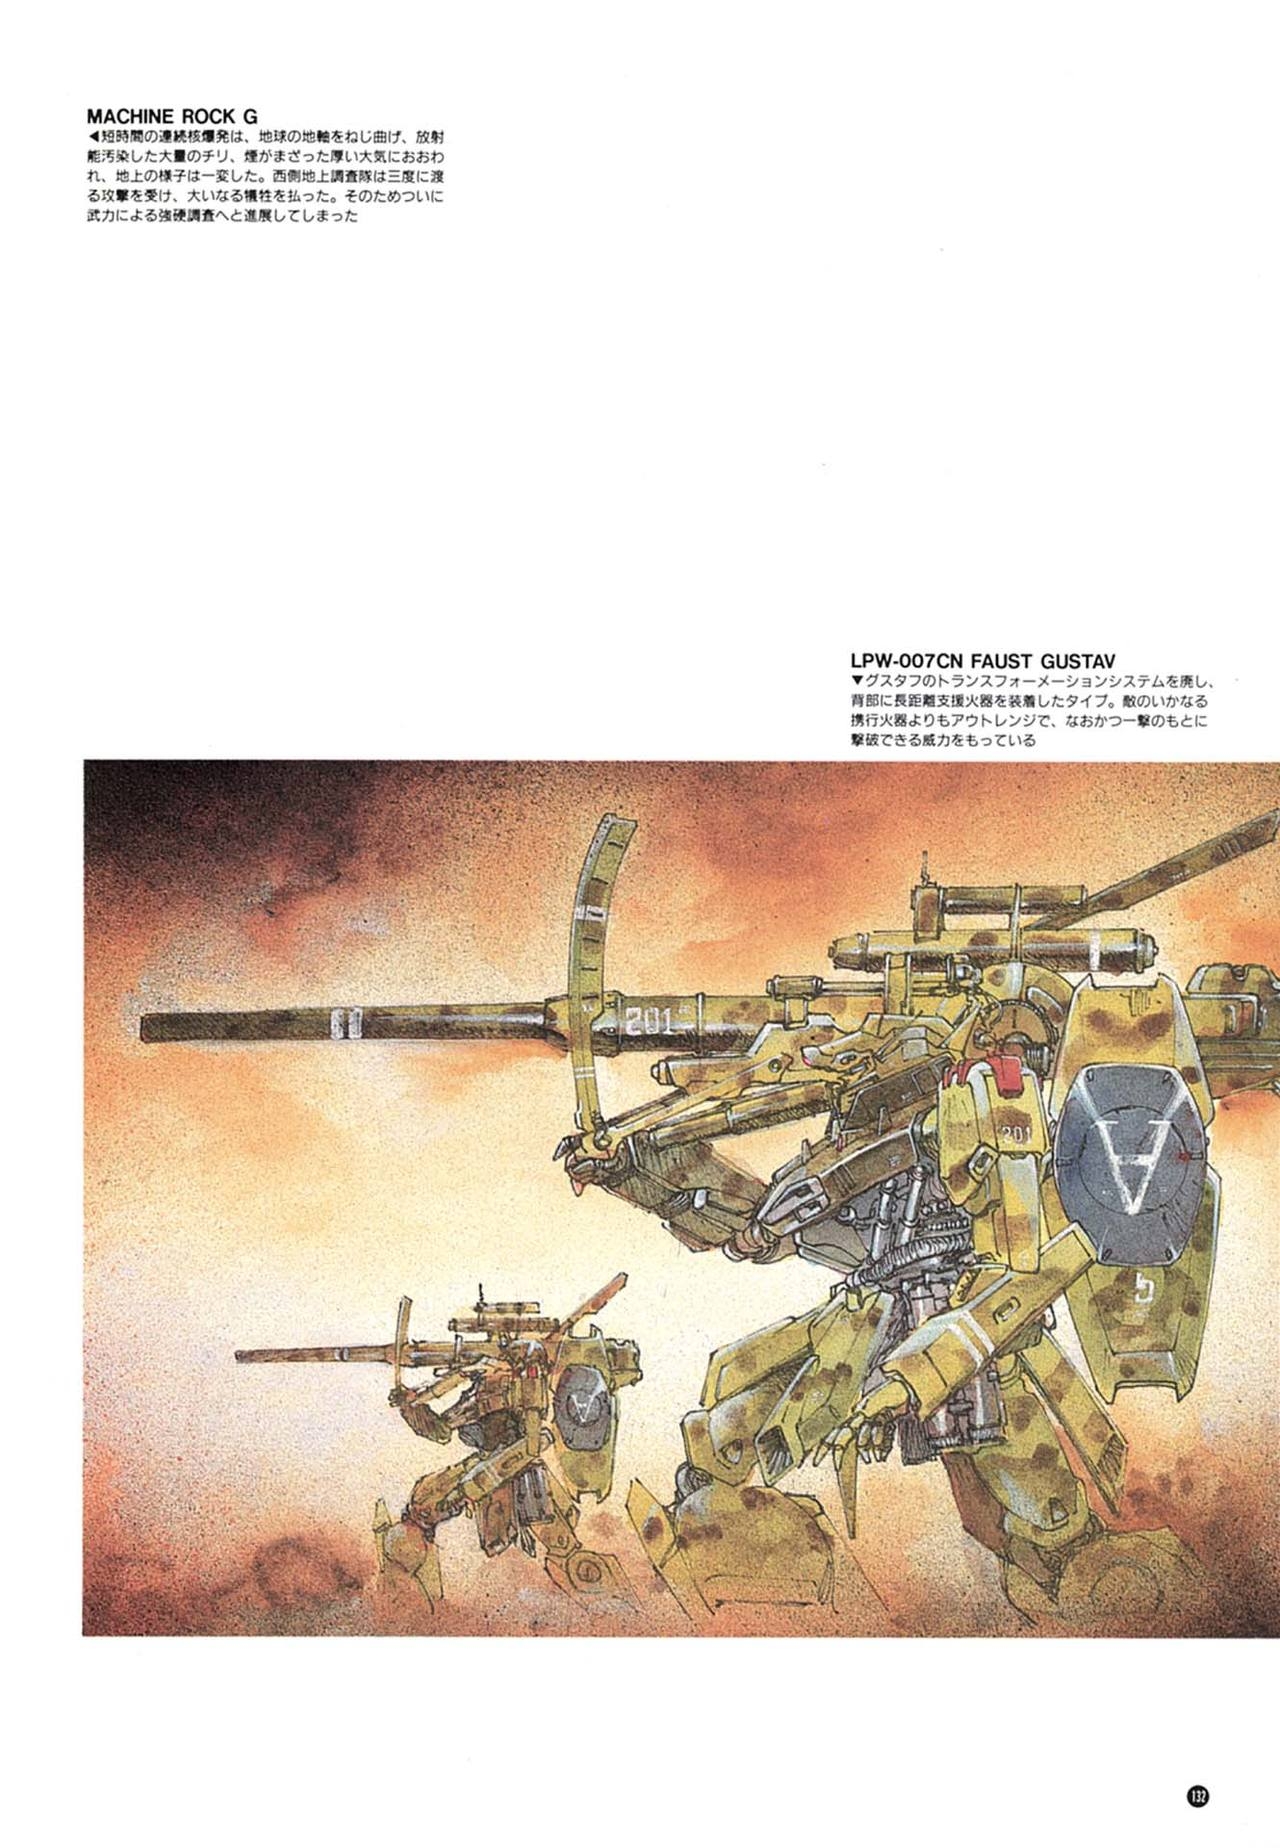 [Kazuhisa Kondo] Kazuhisa Kondo 2D & 3D Works - Go Ahead - From Mobile Suit Gundam to Original Mechanism 131